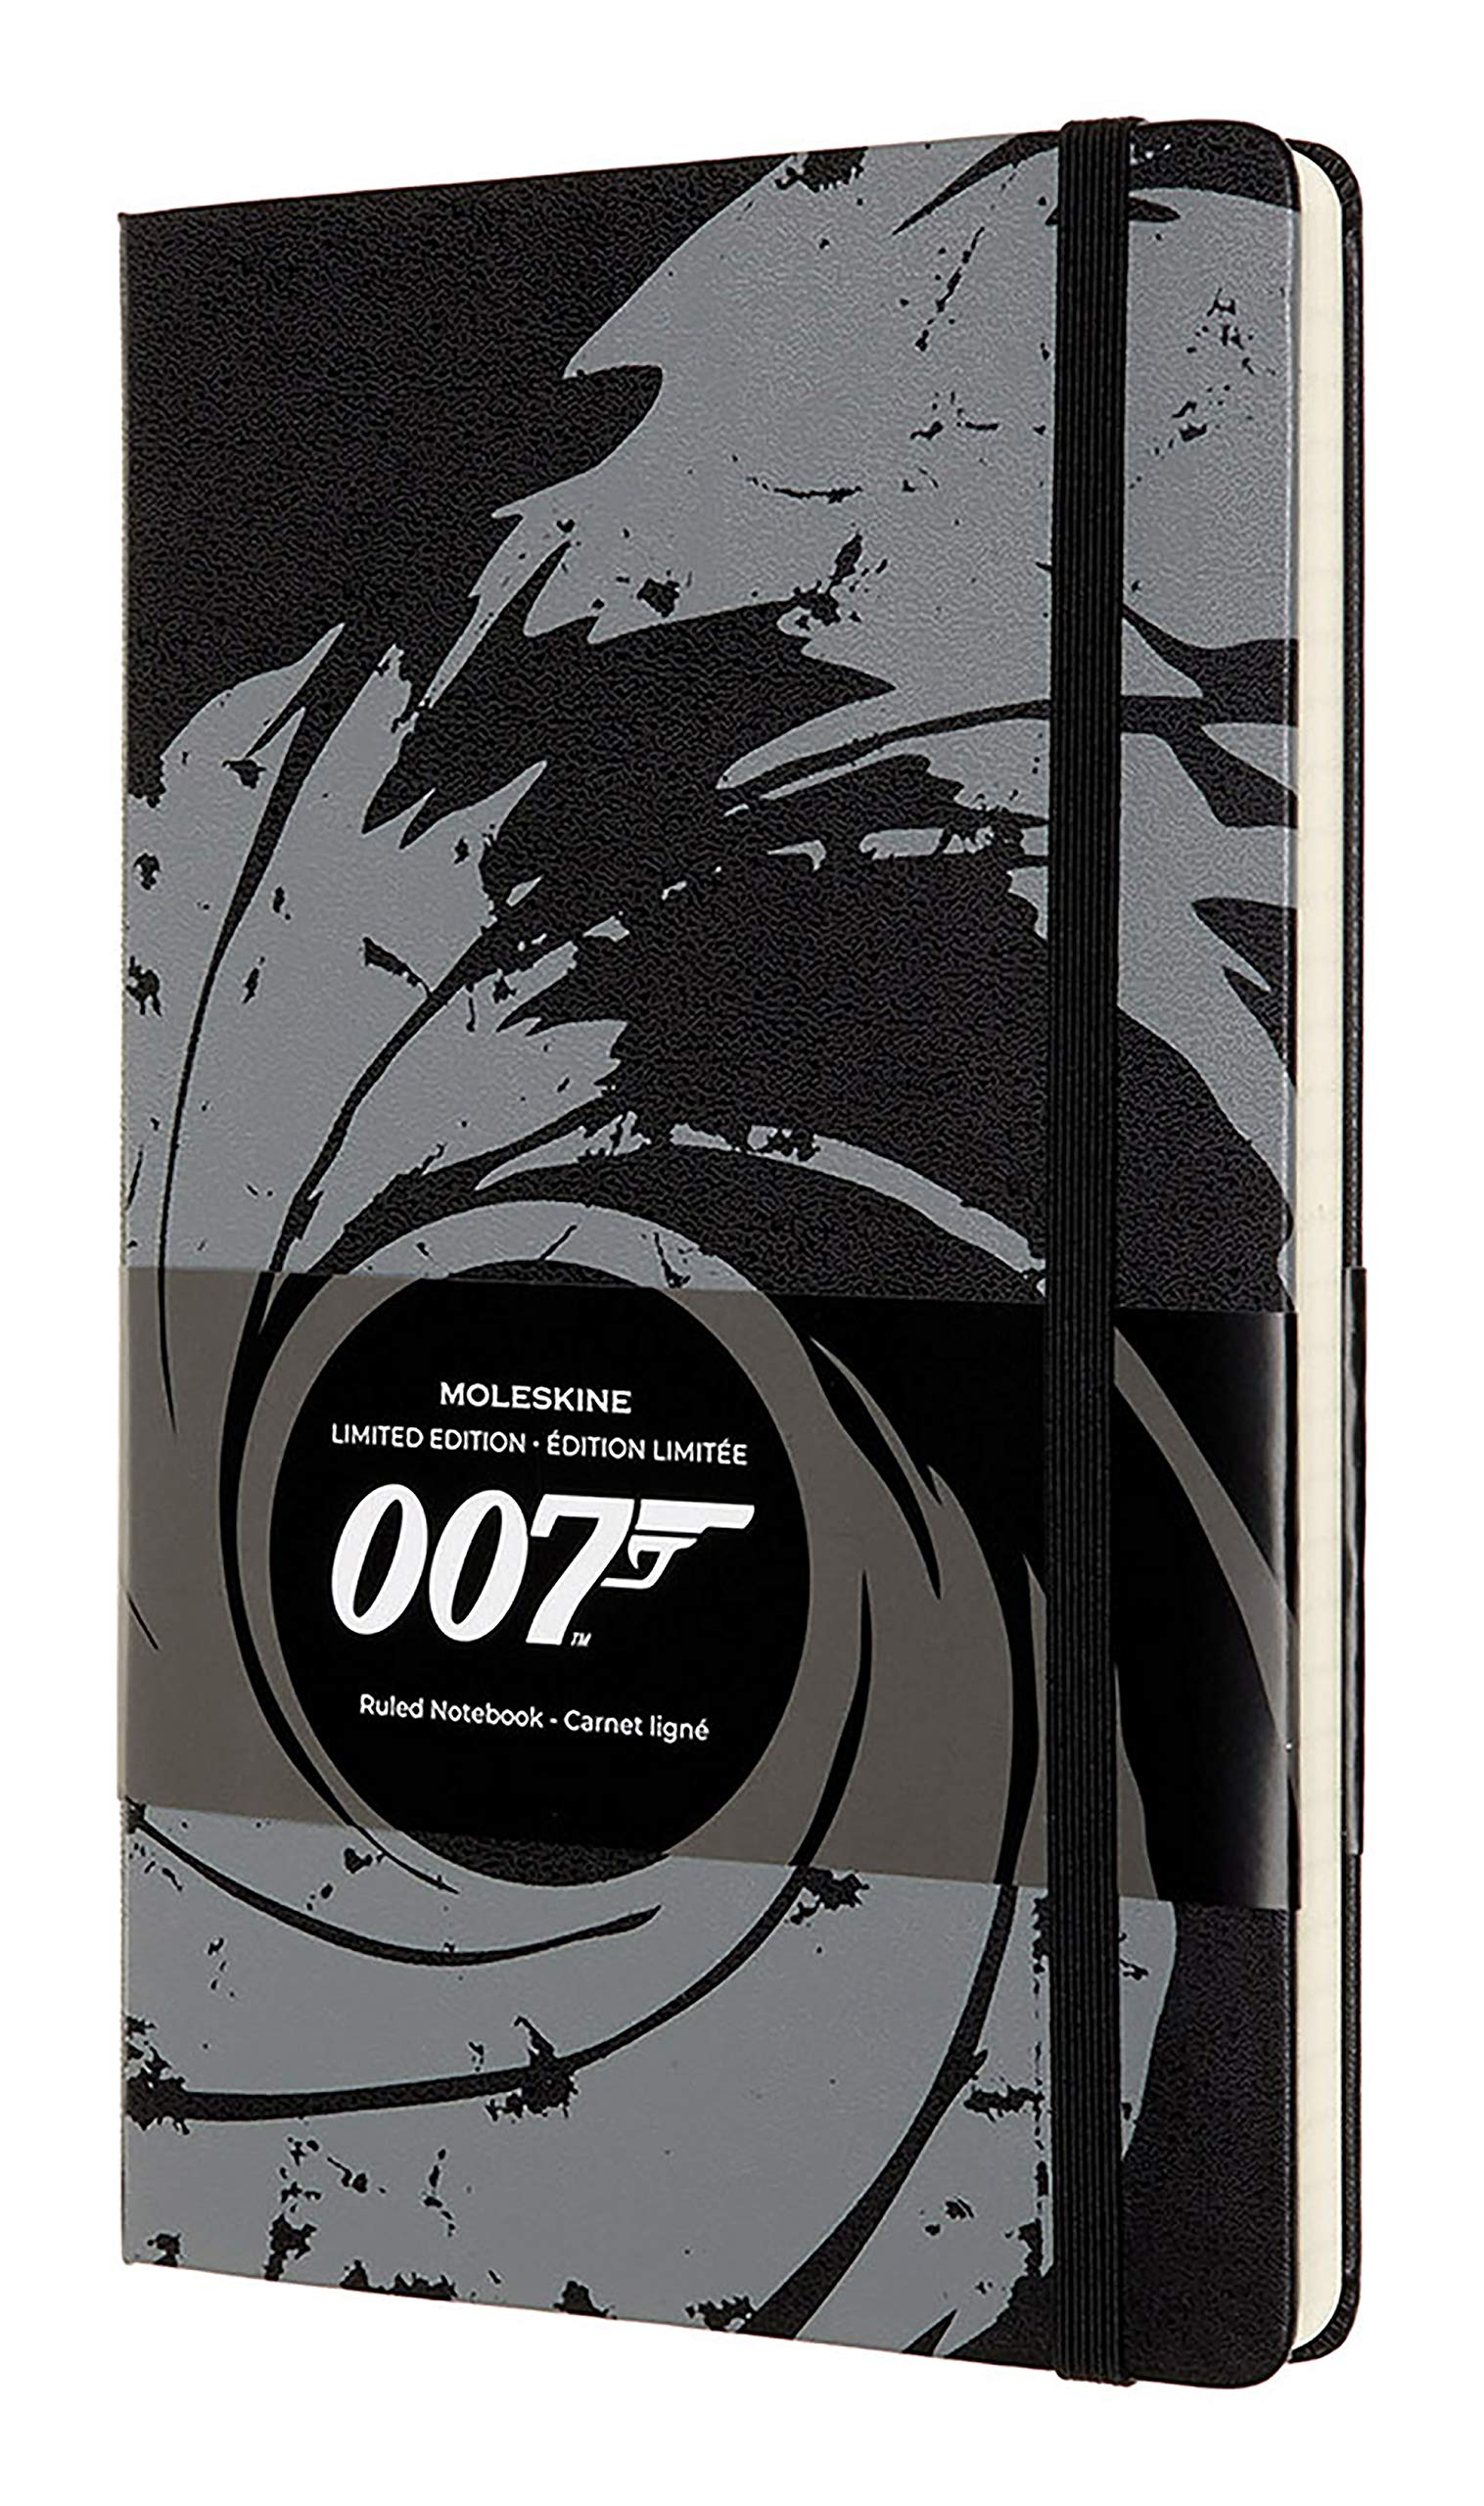 Carnet - Moleskine - James Bond 007 Limited Edition - Hard Cover, Large, Ruled - Black | Moleskine